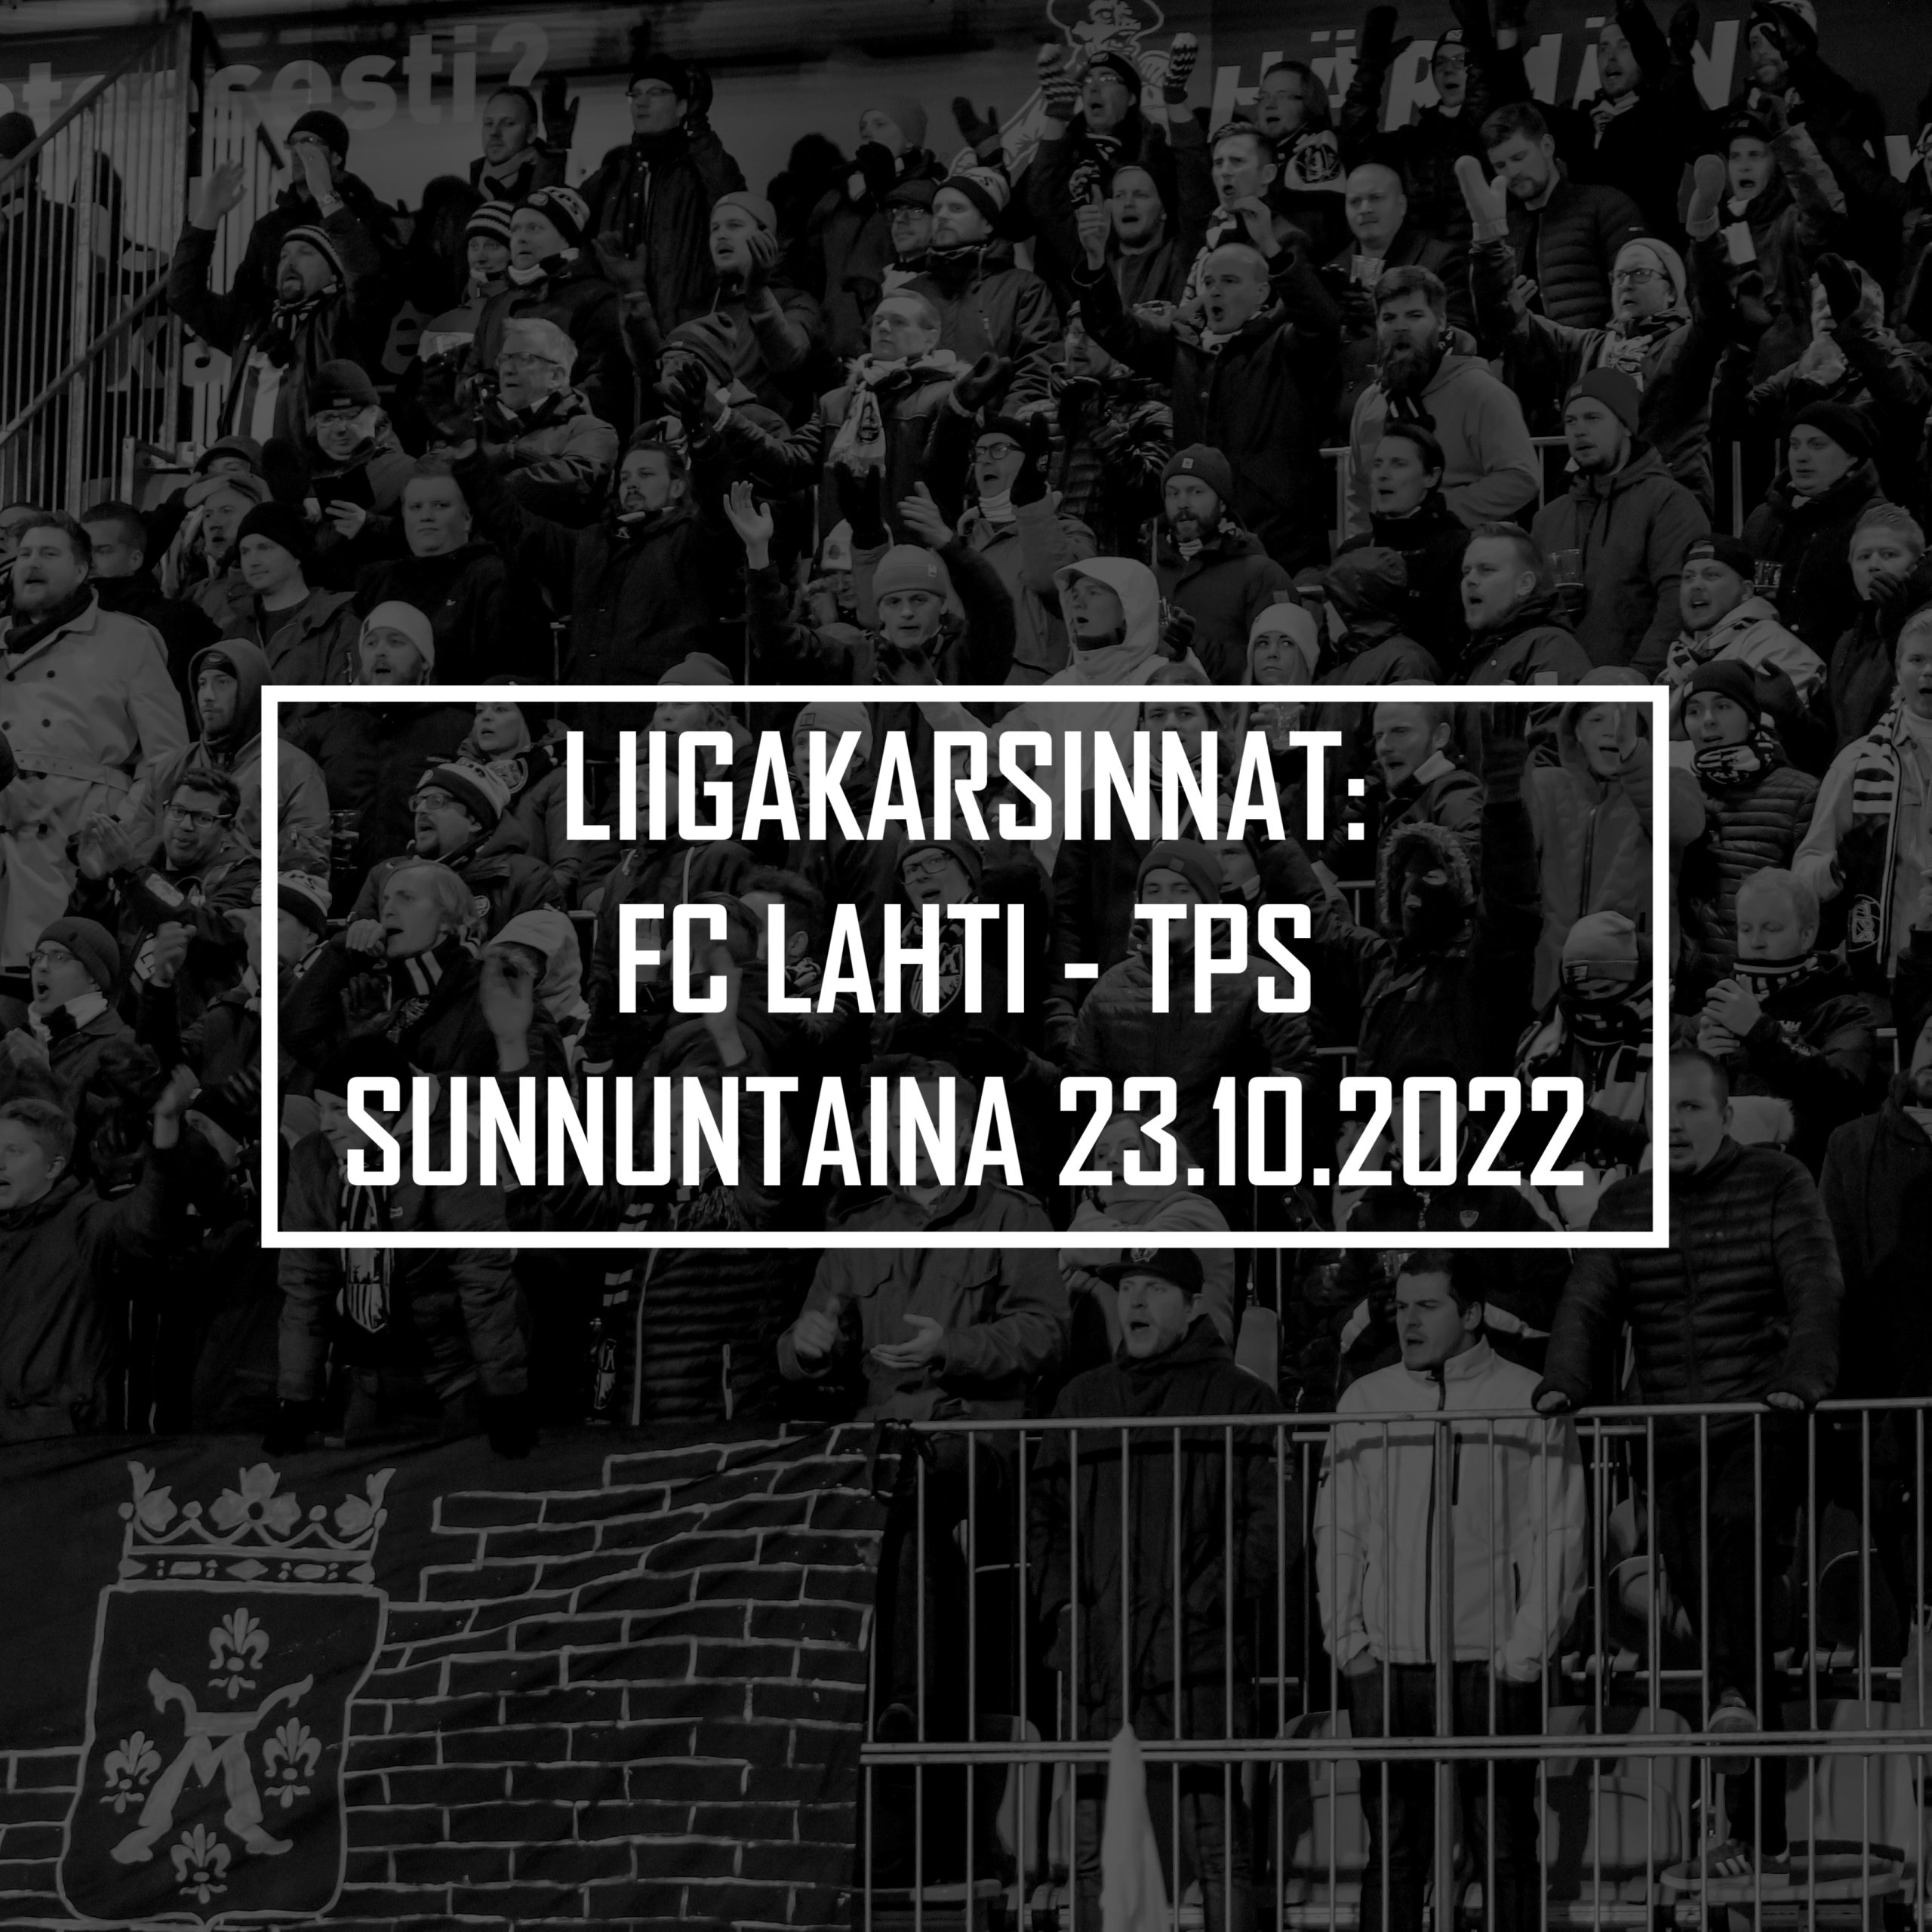 Kannattajamatka: FC Lahti – TPS 23.10.2022 (liigakarsinnat)